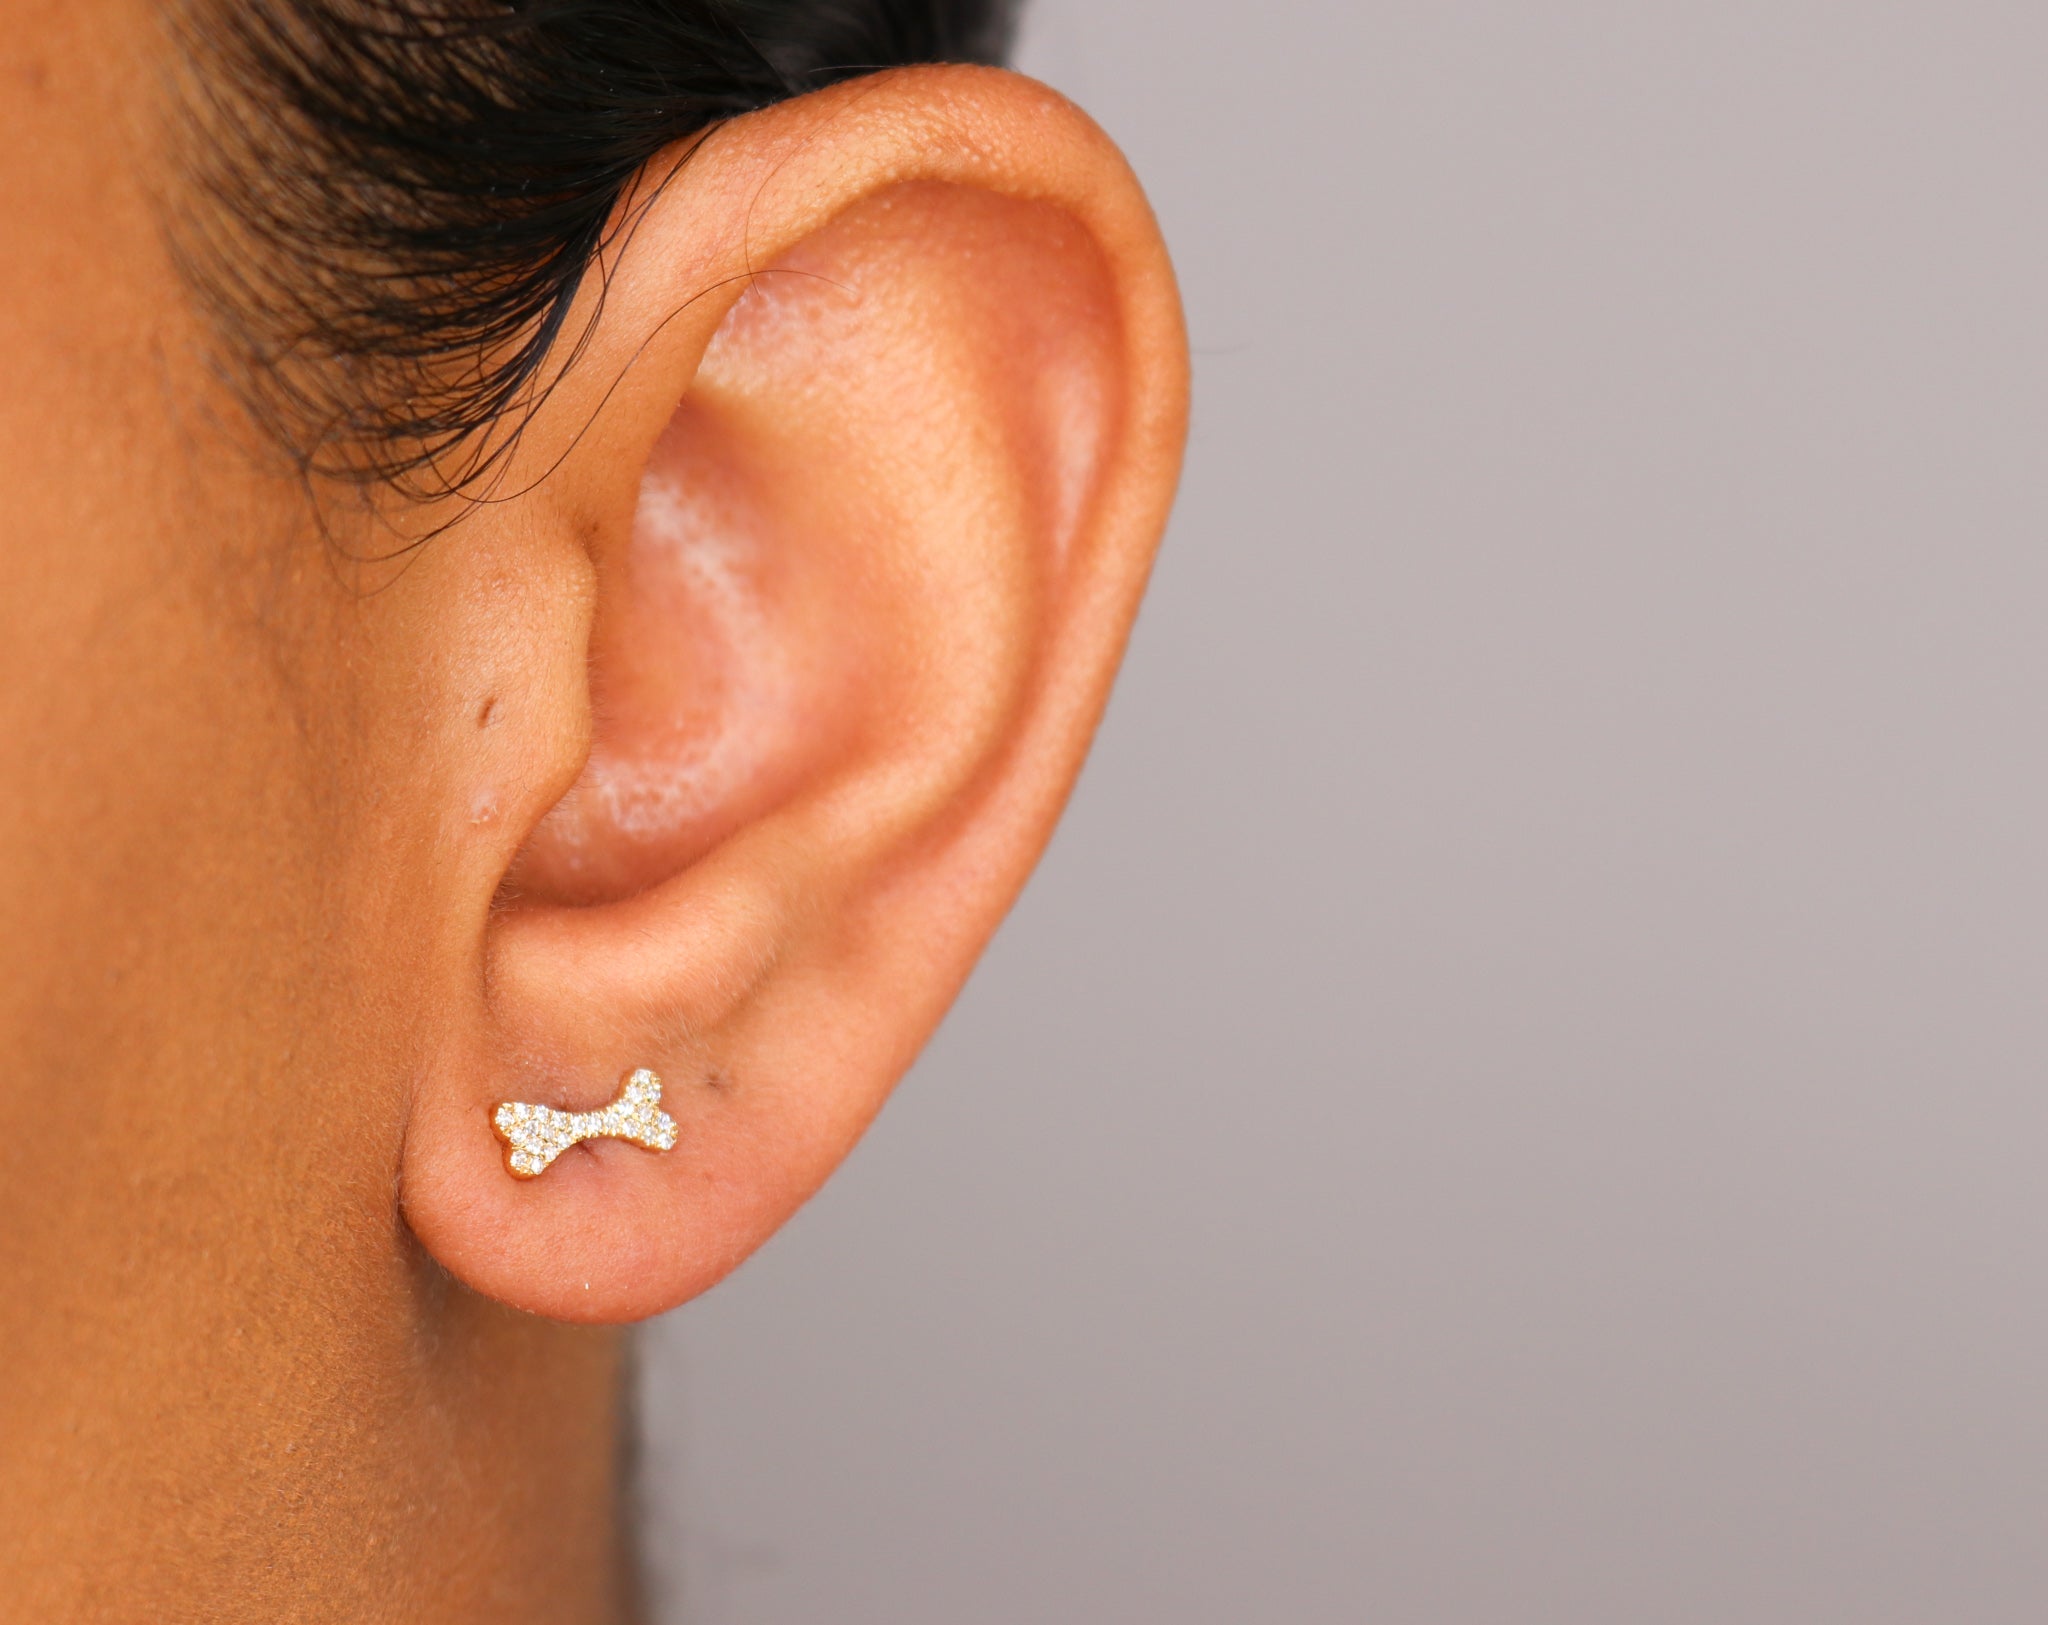 14K Diamond Dog Bone Earrings - Nolita